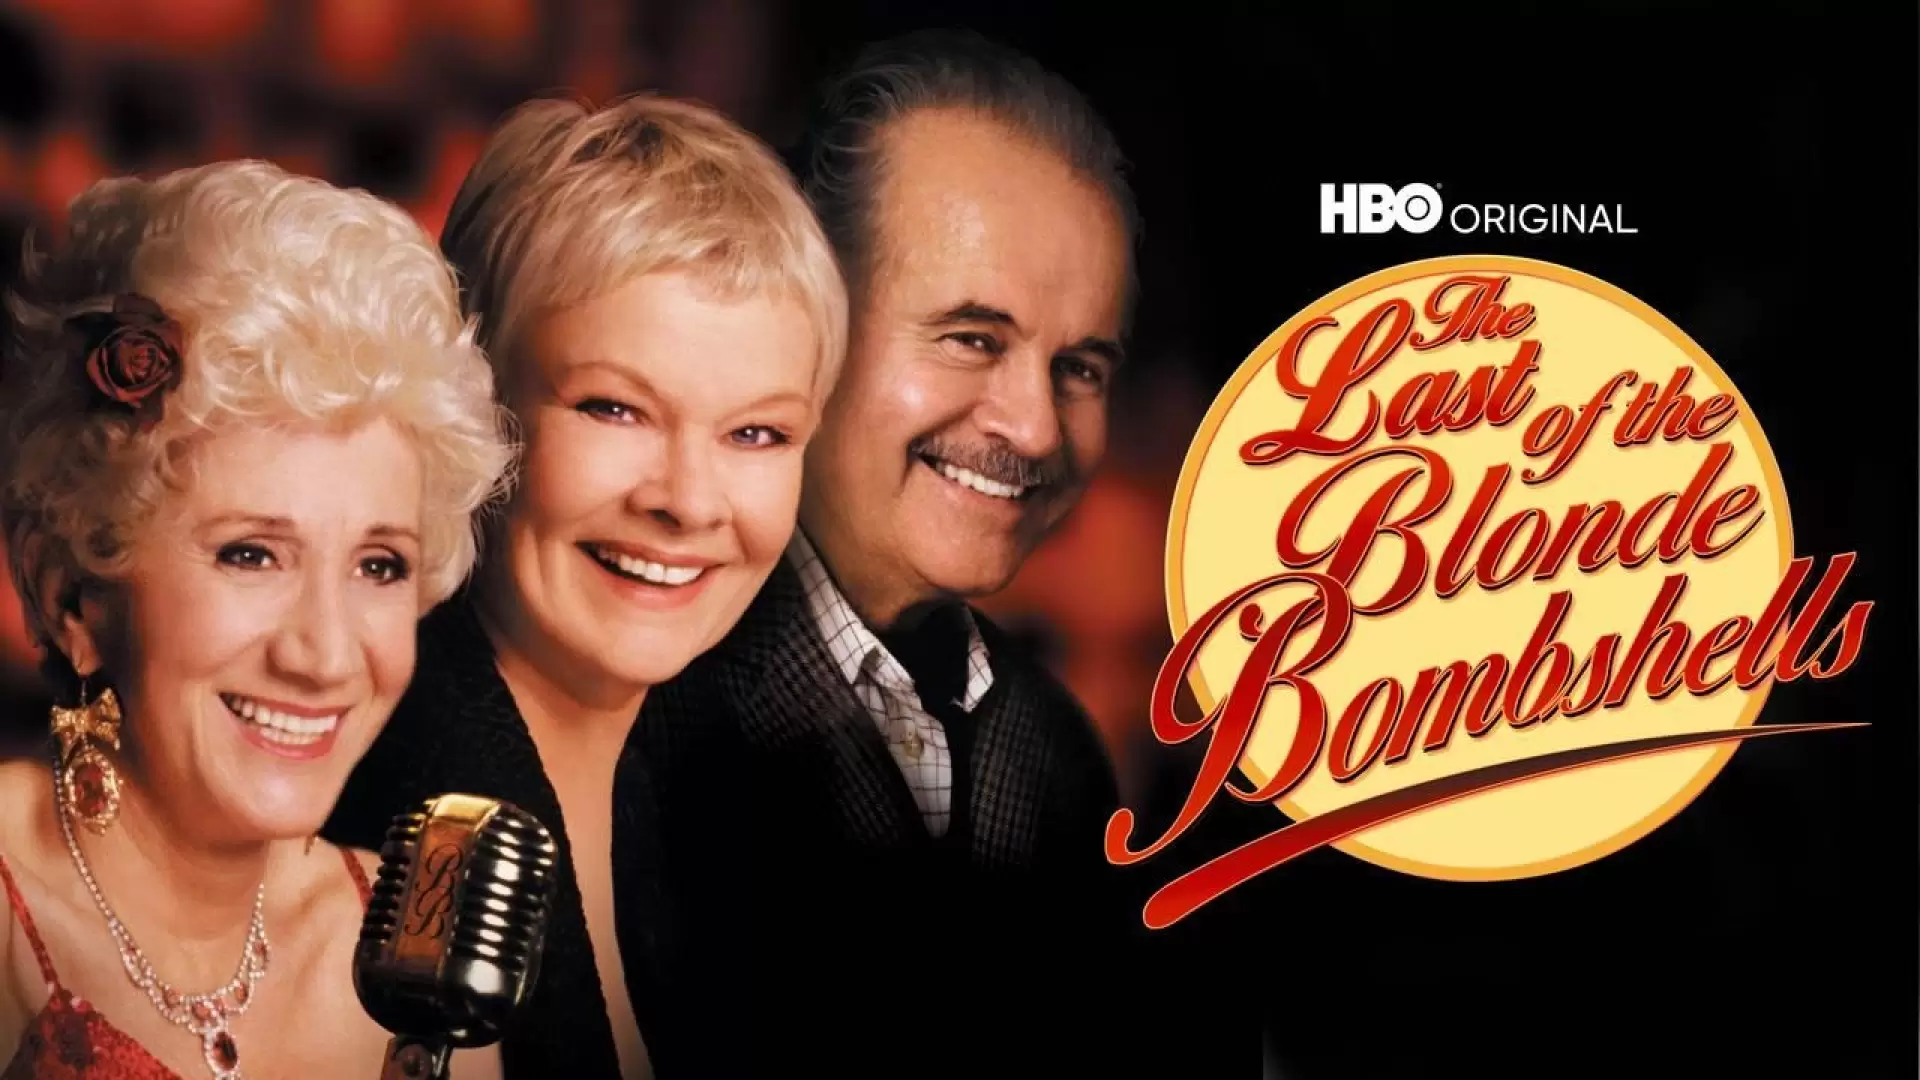 دانلود فیلم The Last of the Blonde Bombshells 2000